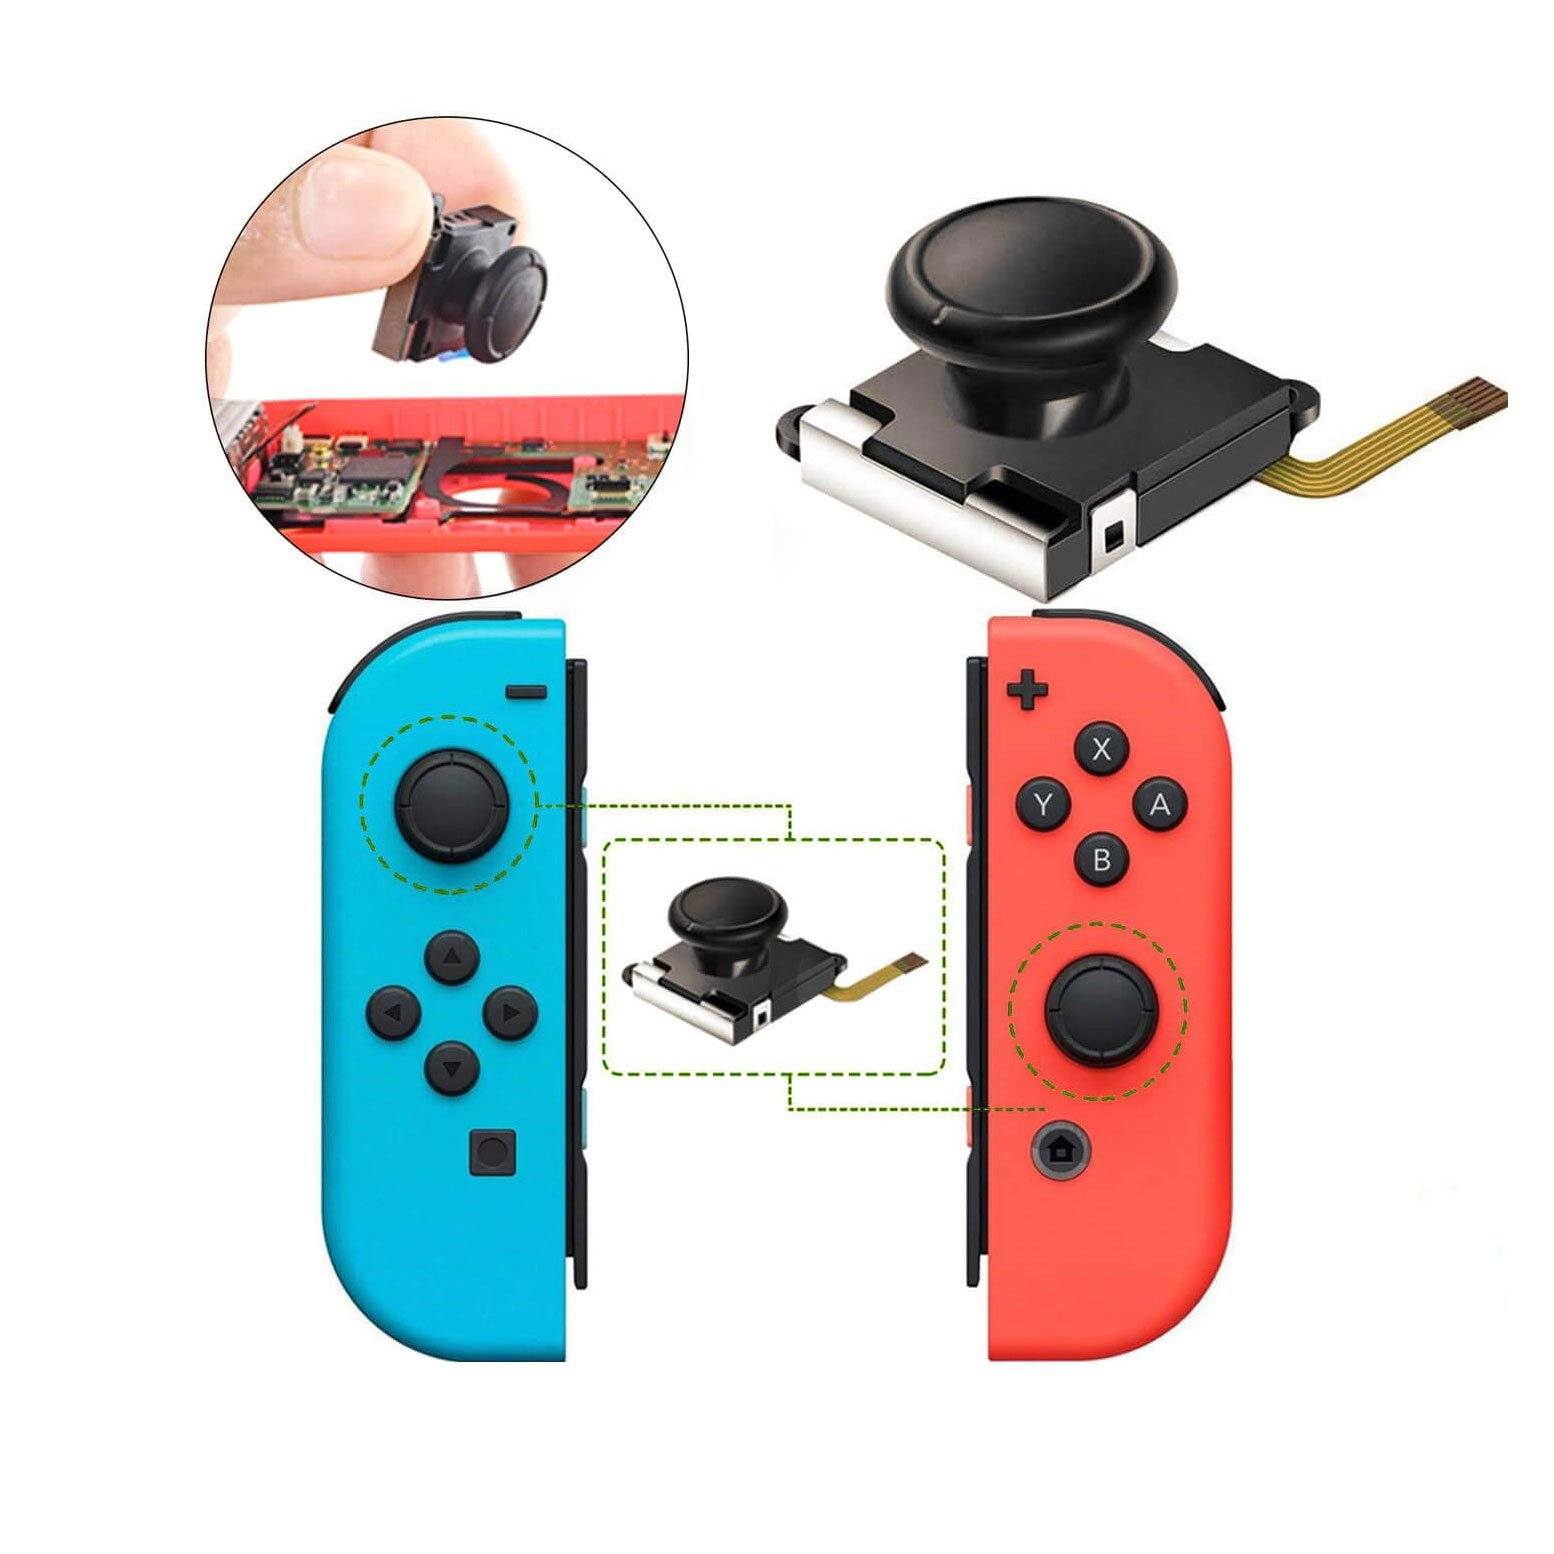 Joystick Replacement for Nintendo Switch Joy-con | Hand Held Legend